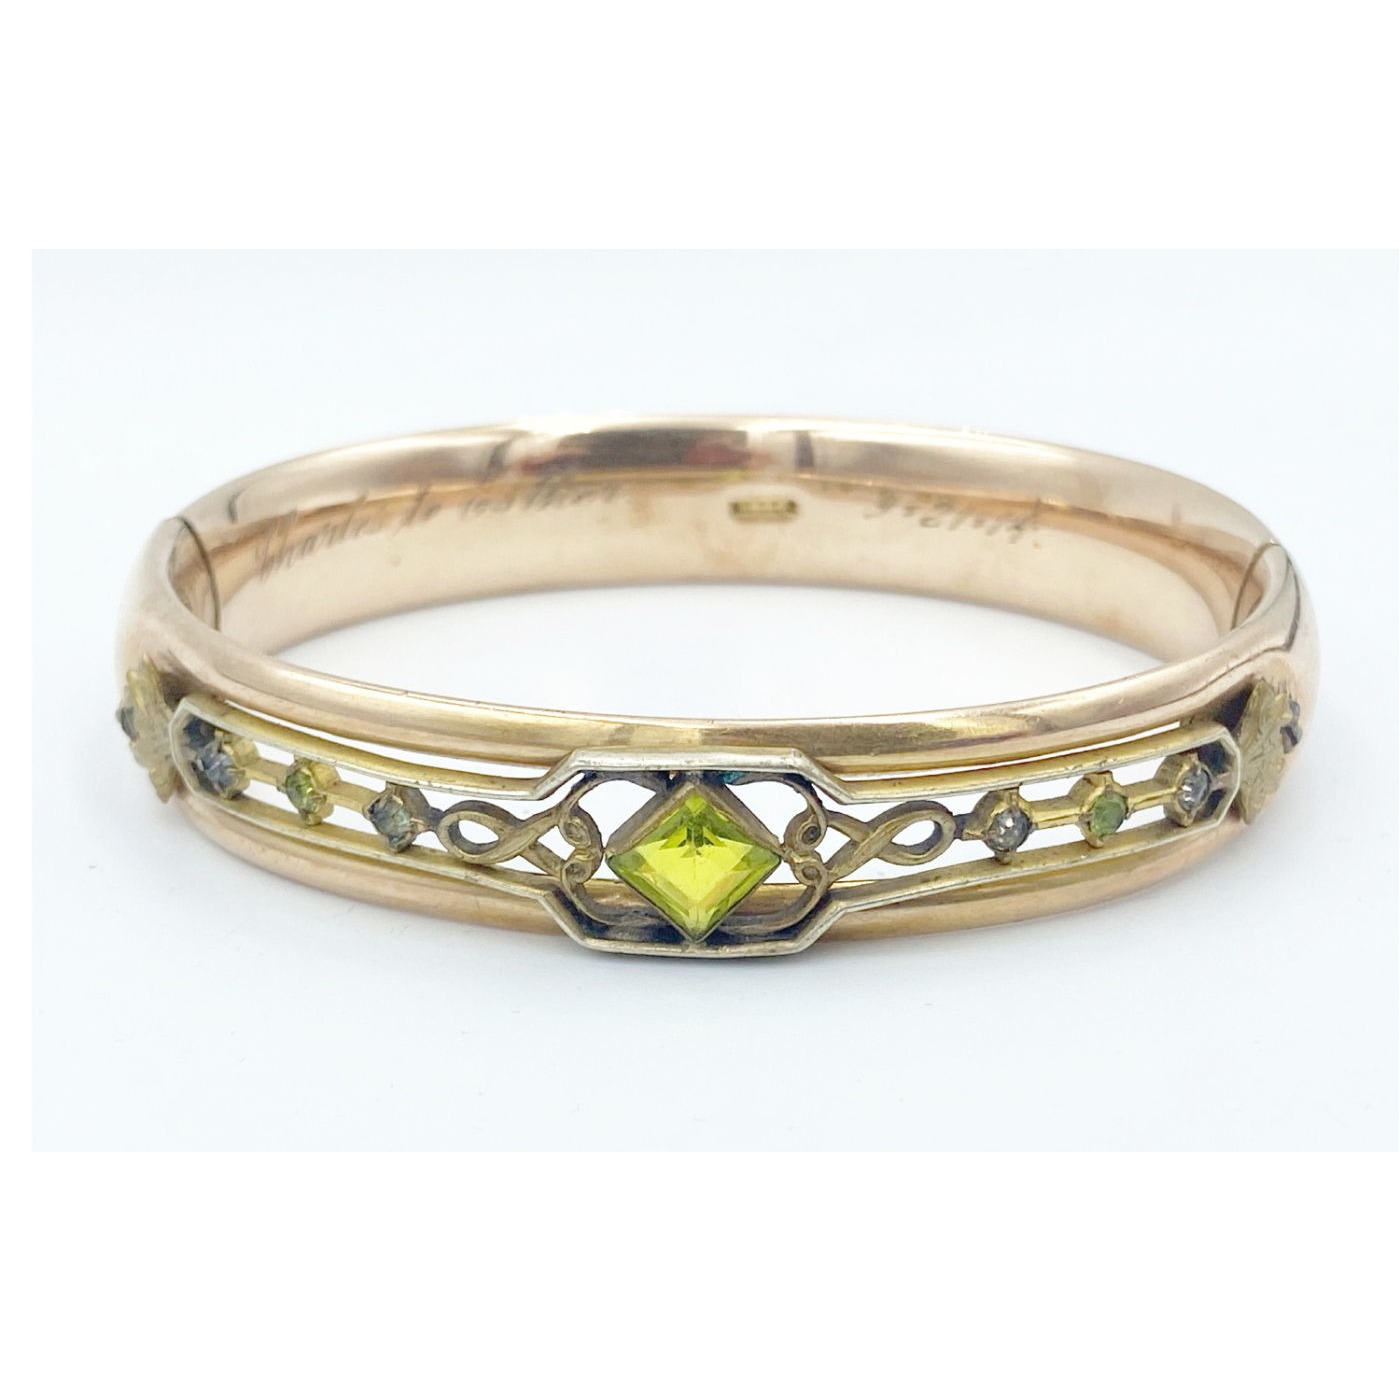 Unusual Lime Green Central Stone Engagement Bangle Bracelet